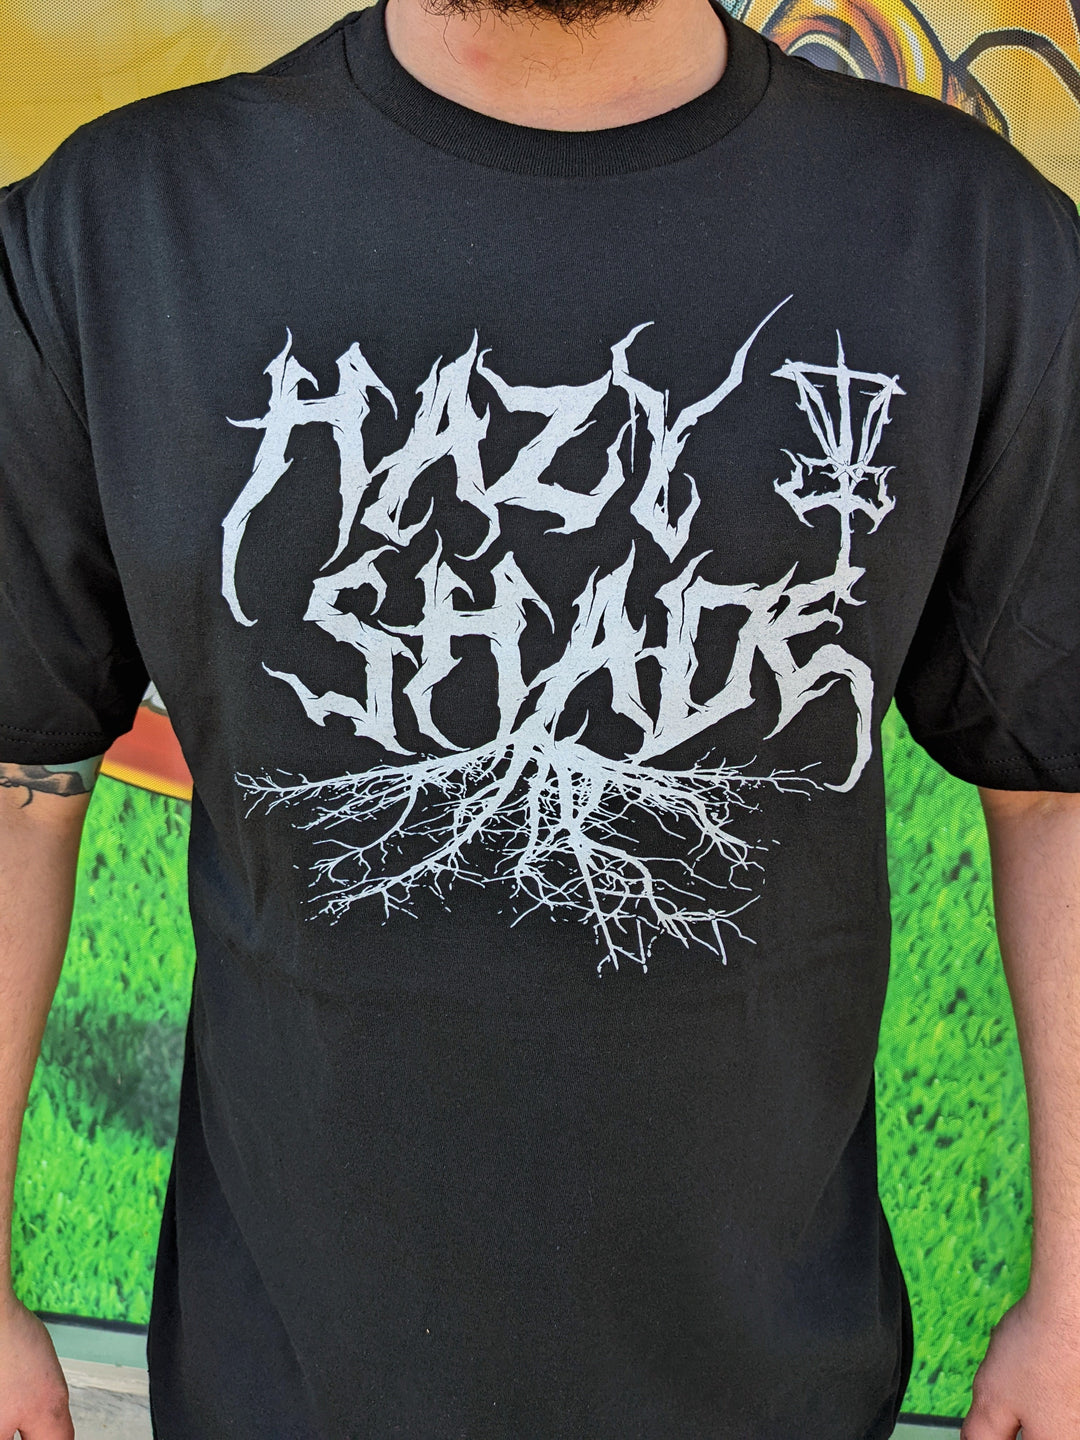 Hazy Shade Metal Tee Shirt Medium